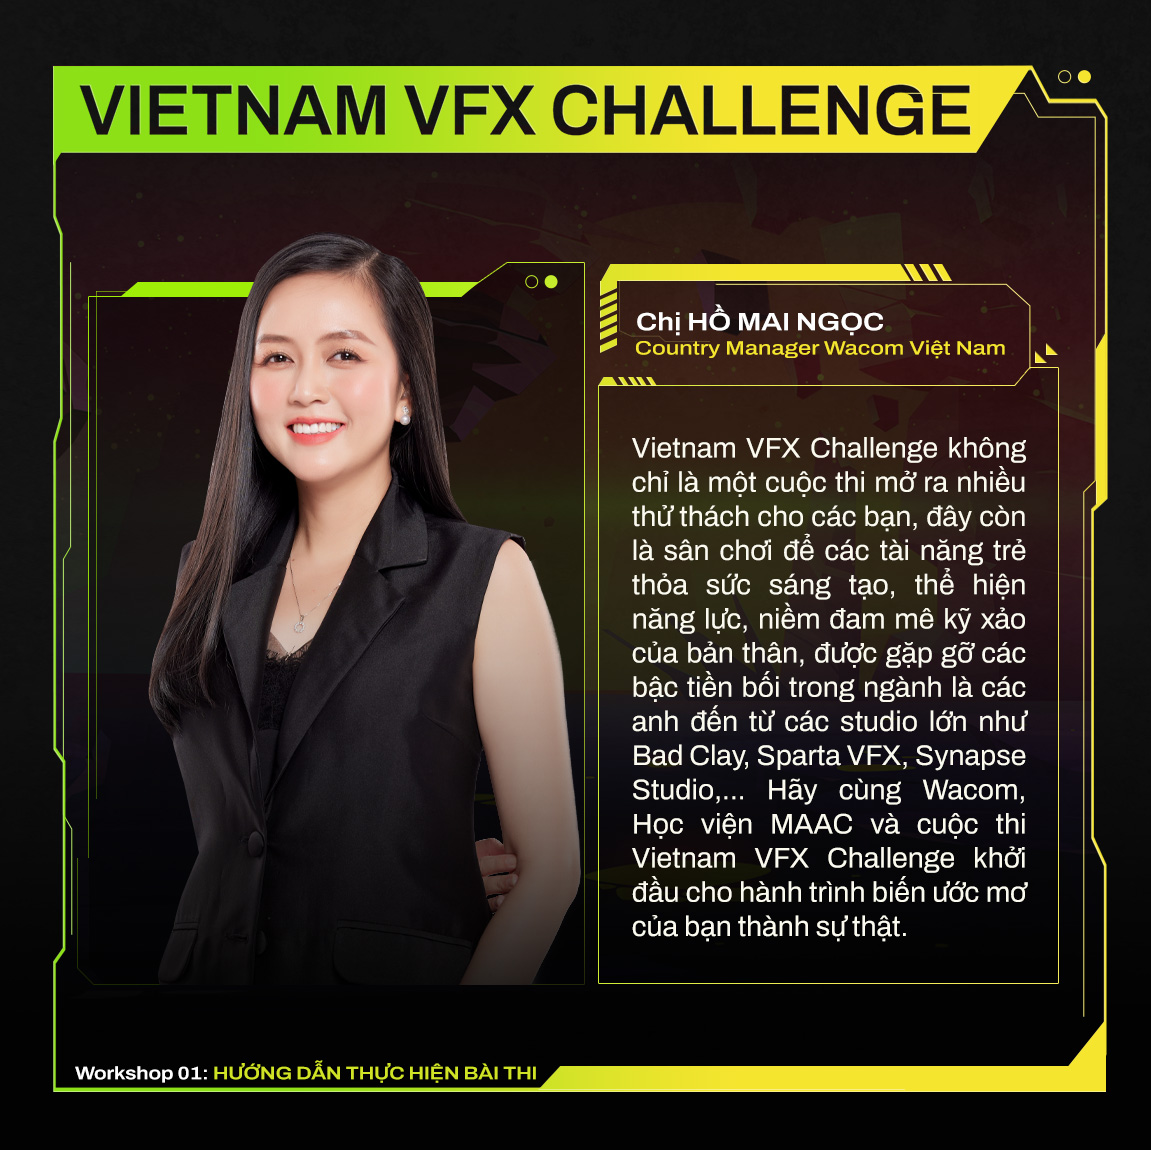 5-lang-nghe-ban-giam-khao-vietnam-vfx-challenge-he-lo-bi-quyet-chinh-phuc-cuoc-thi